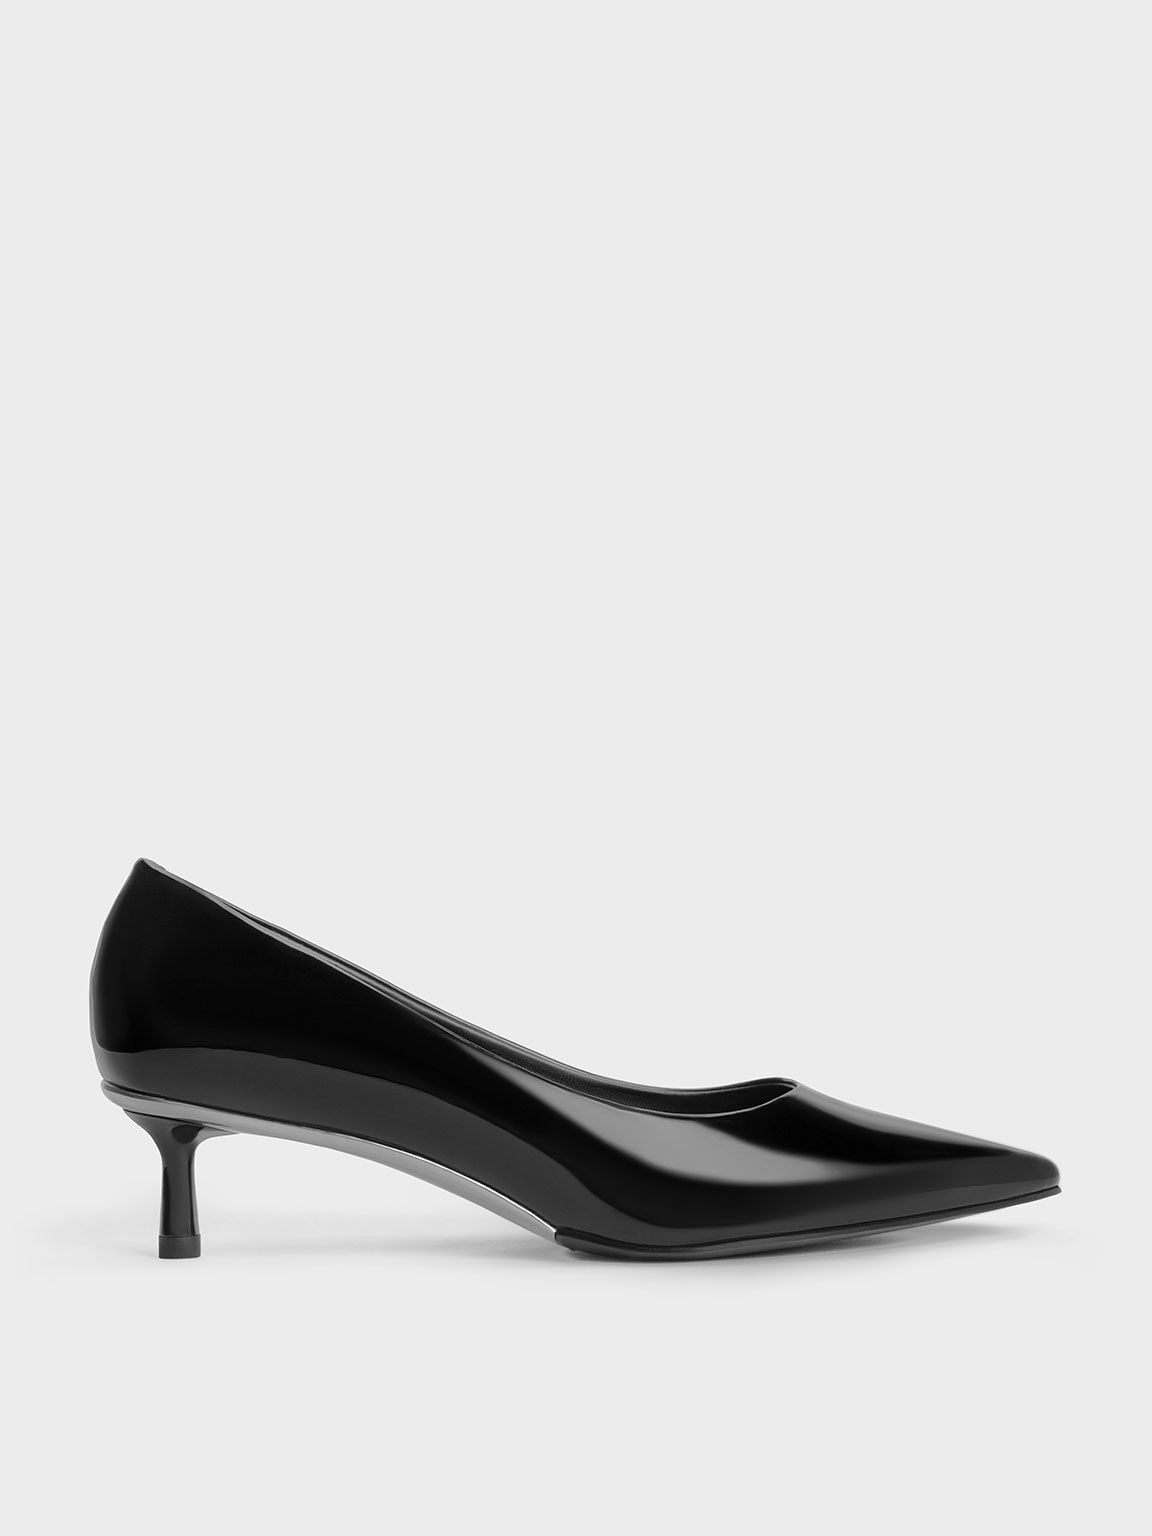 Stiletto Pumps | Ankle Strap | Dress Shoes | High Heels - Ankle Strap Women Black  Patent - Aliexpress